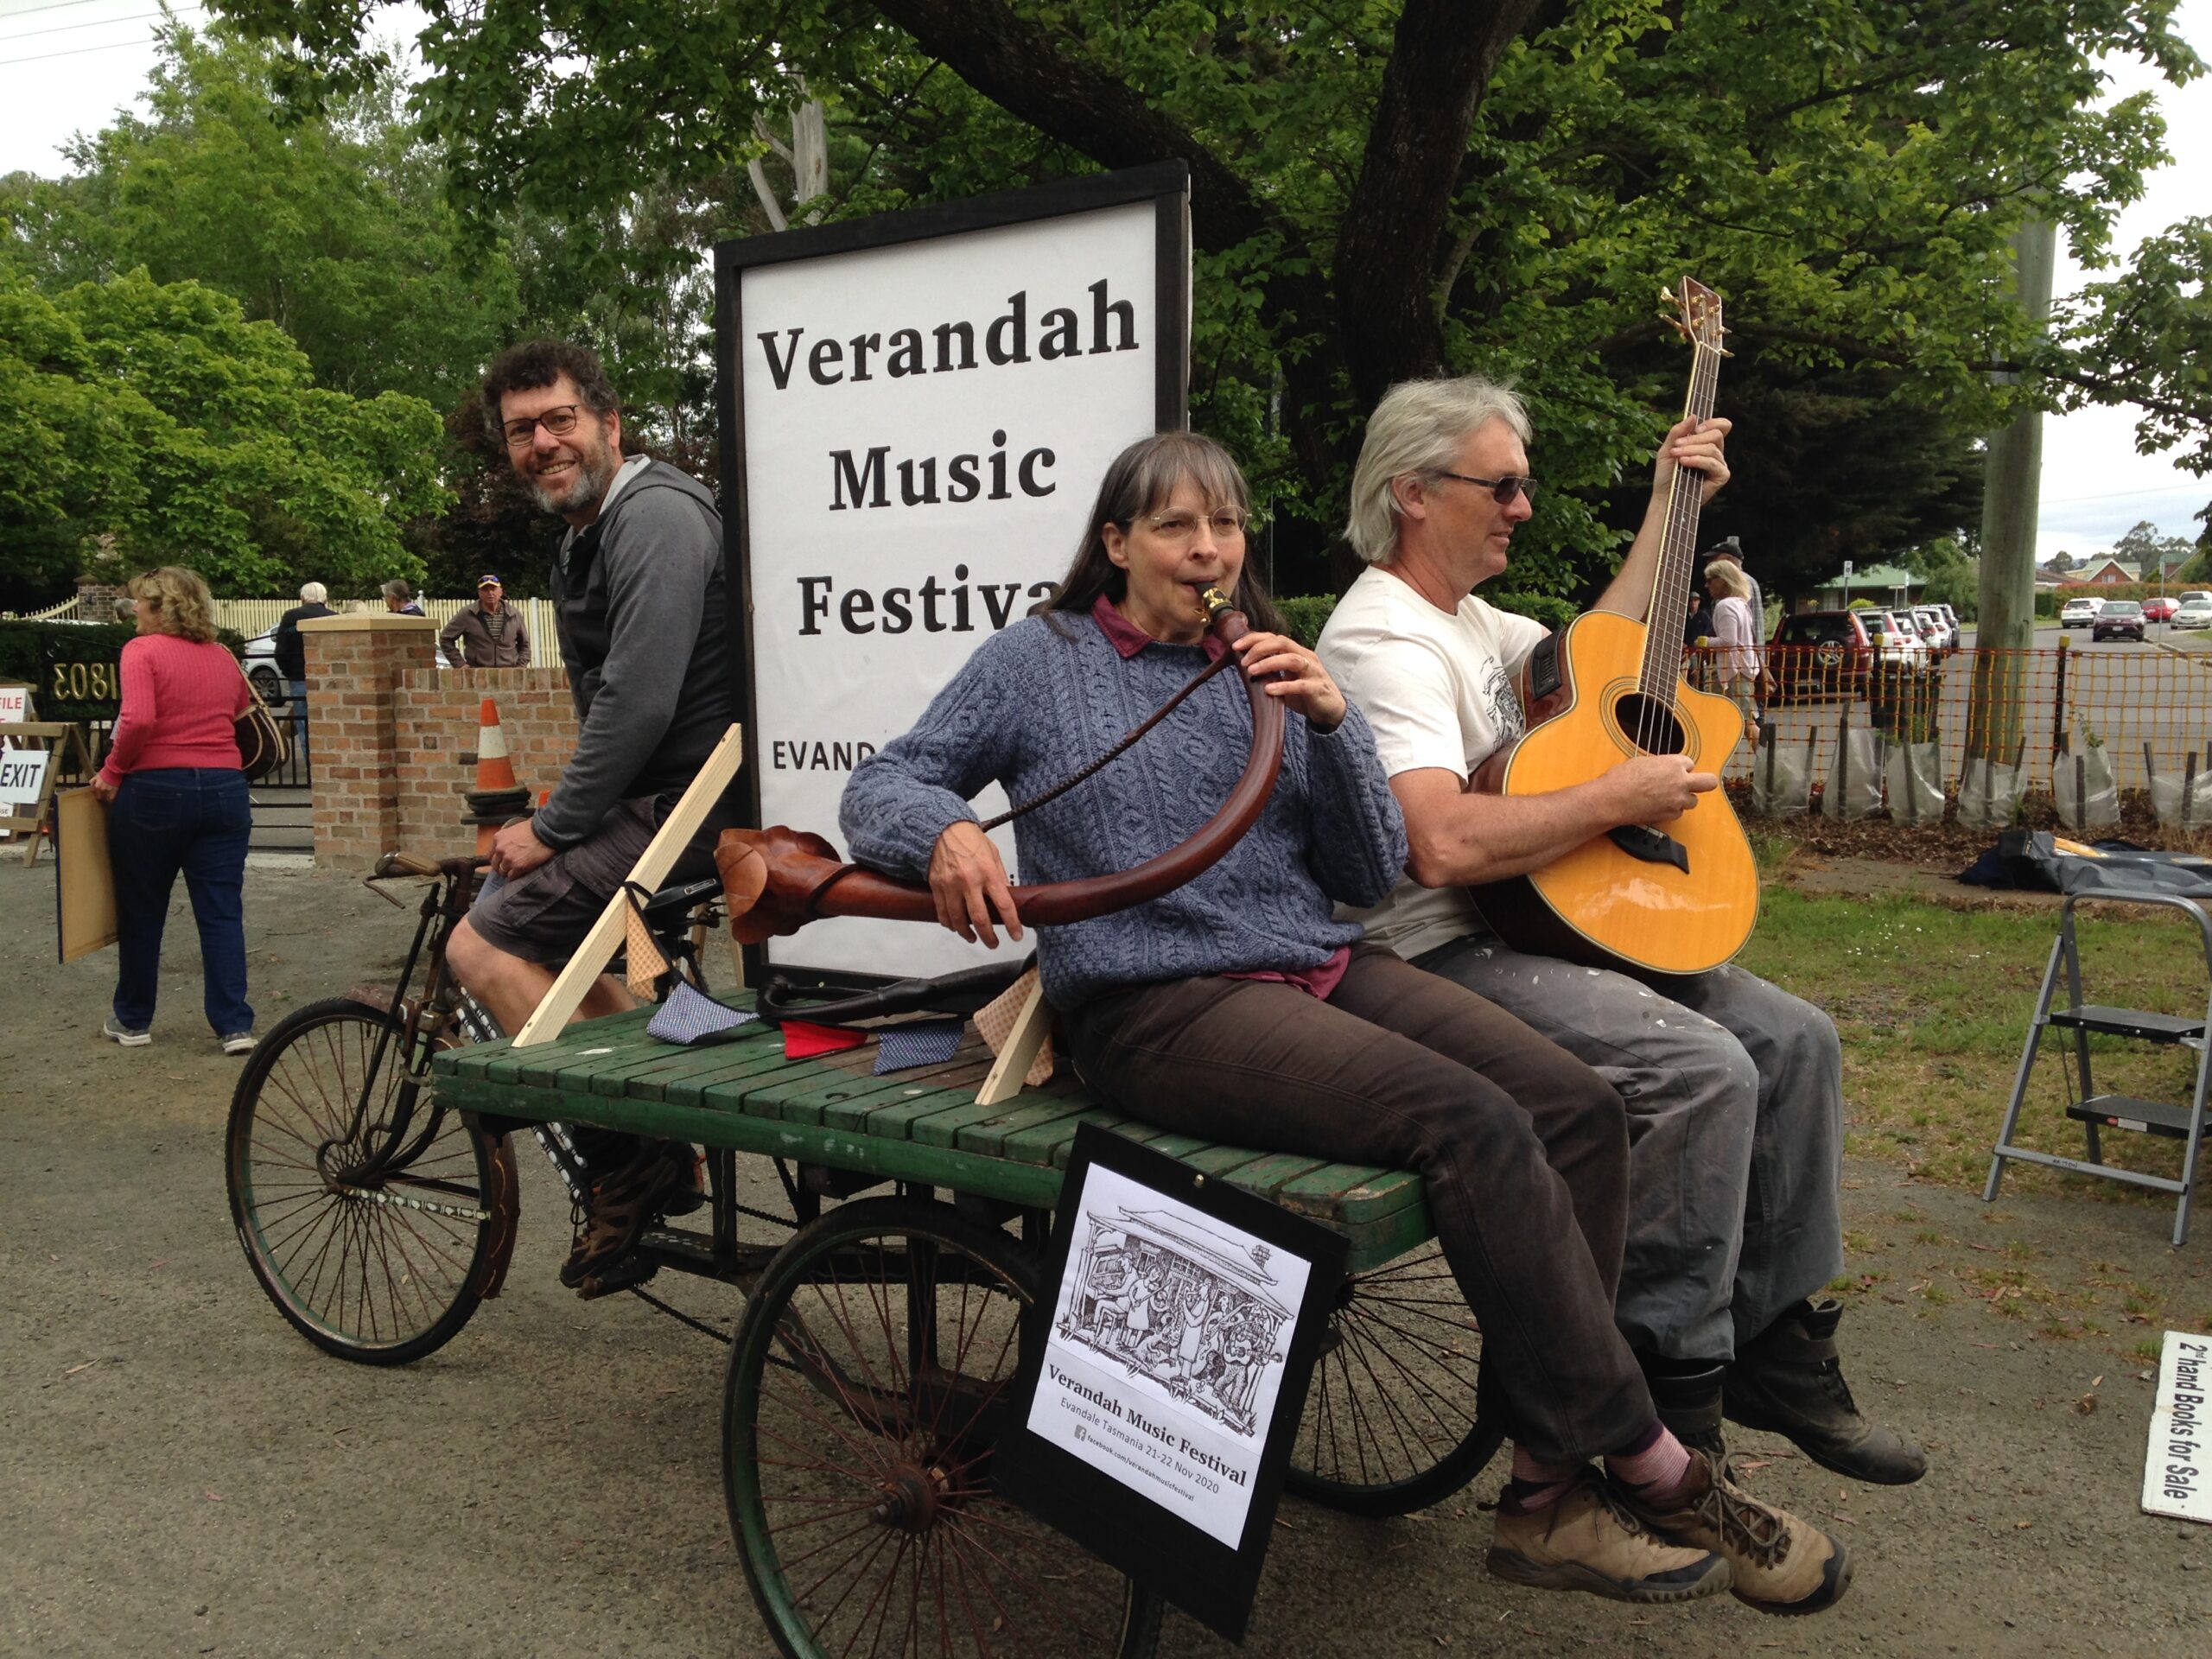 Contact Verandah Music Festival